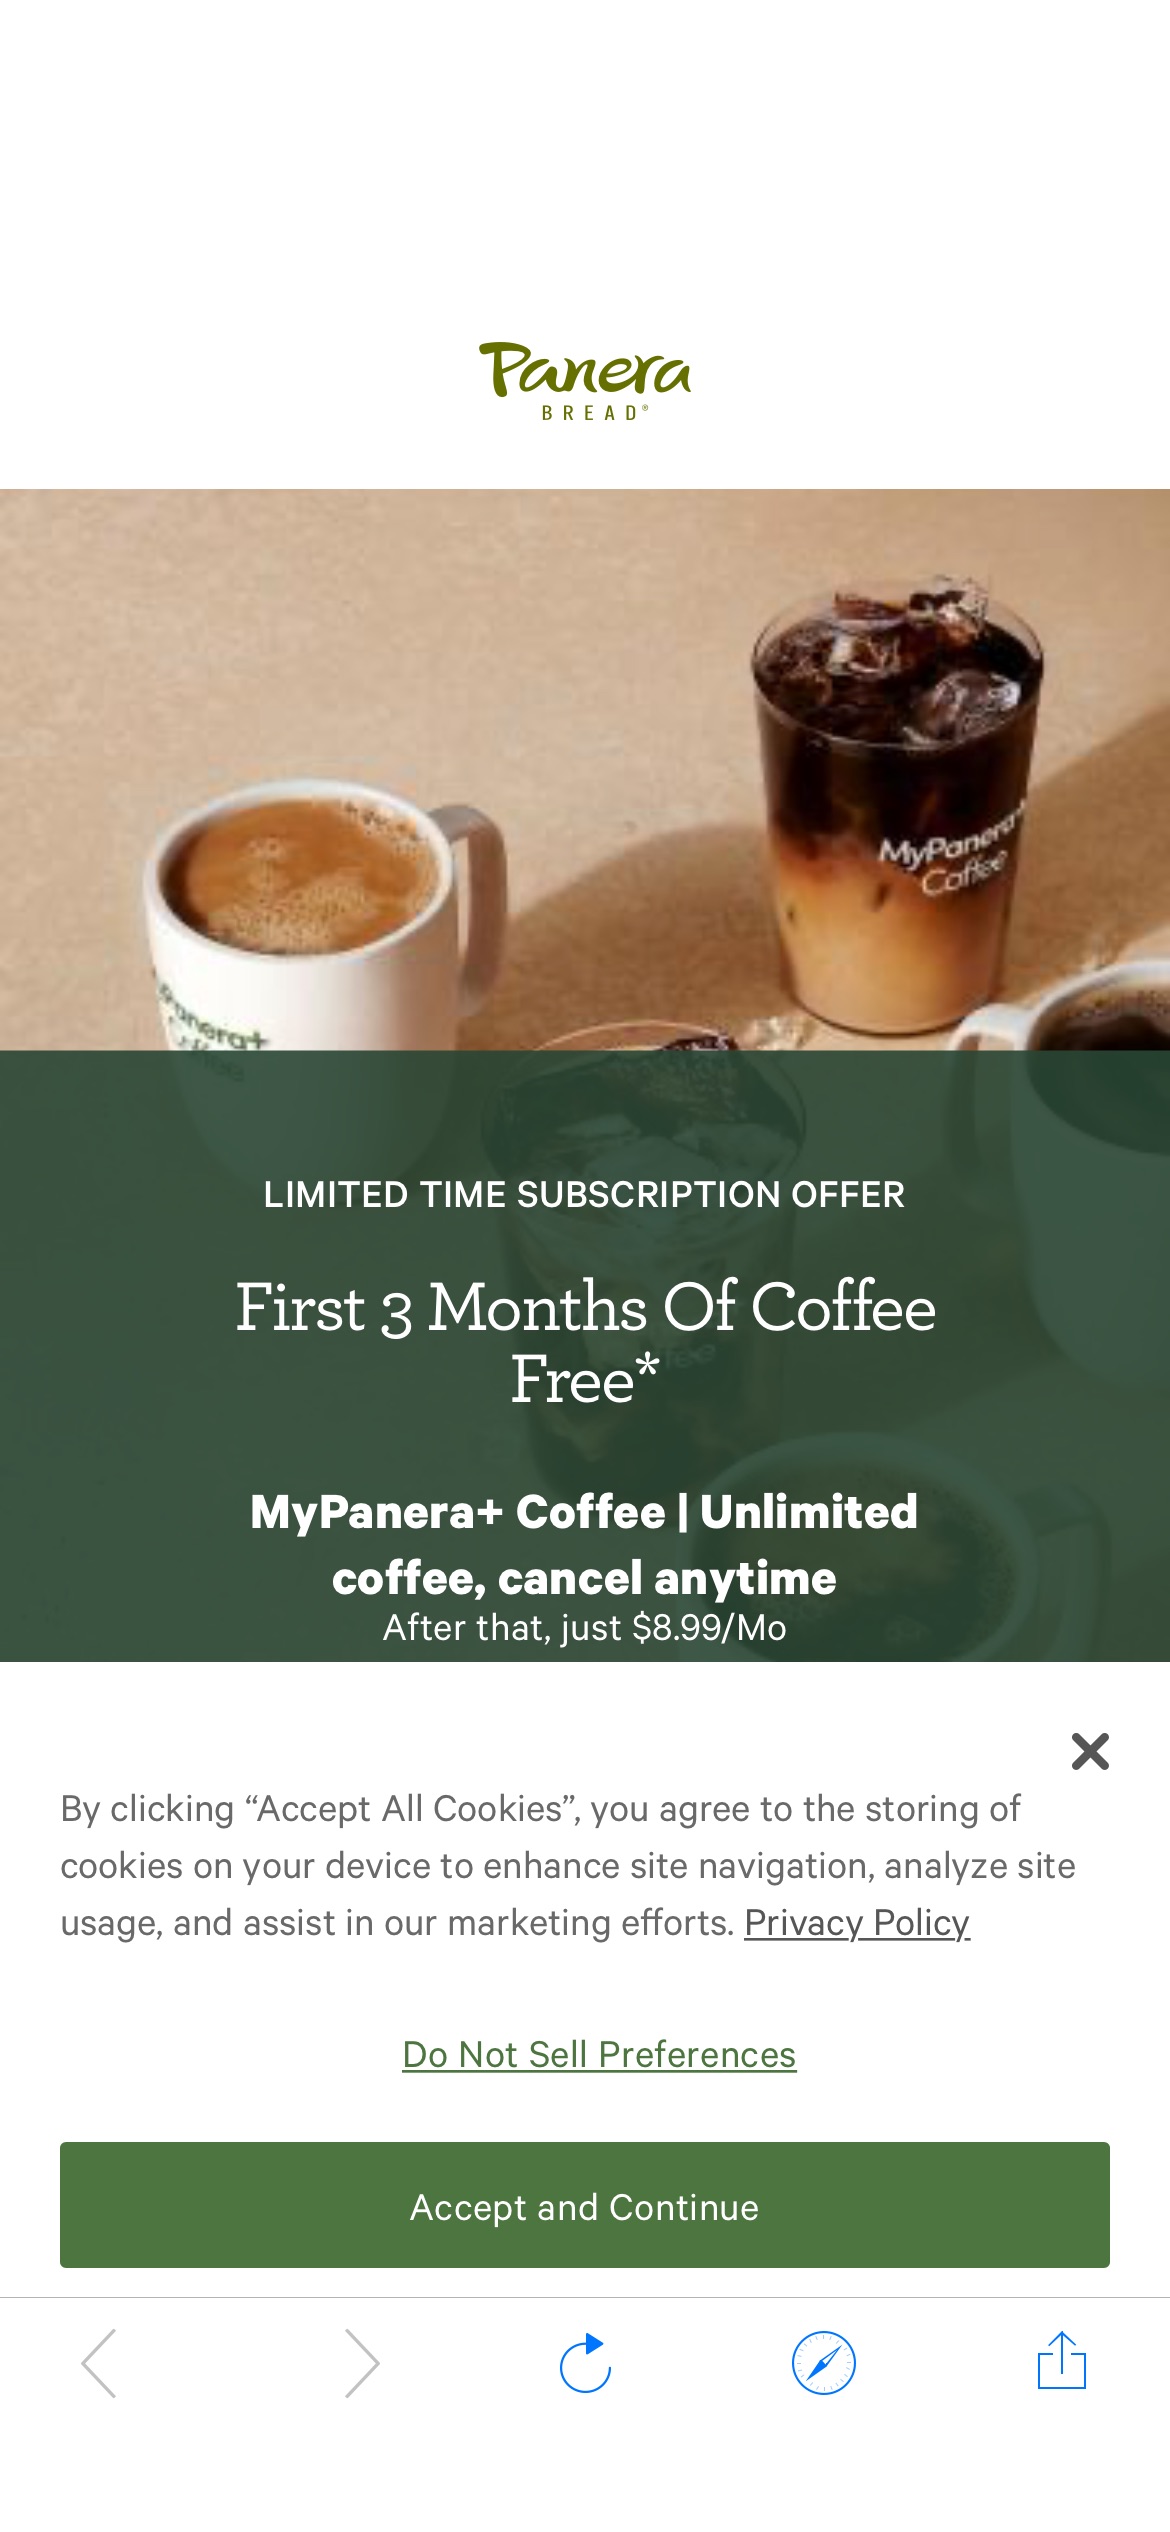 潘娜拉面包店 MyPanera+ Coffee Subscription